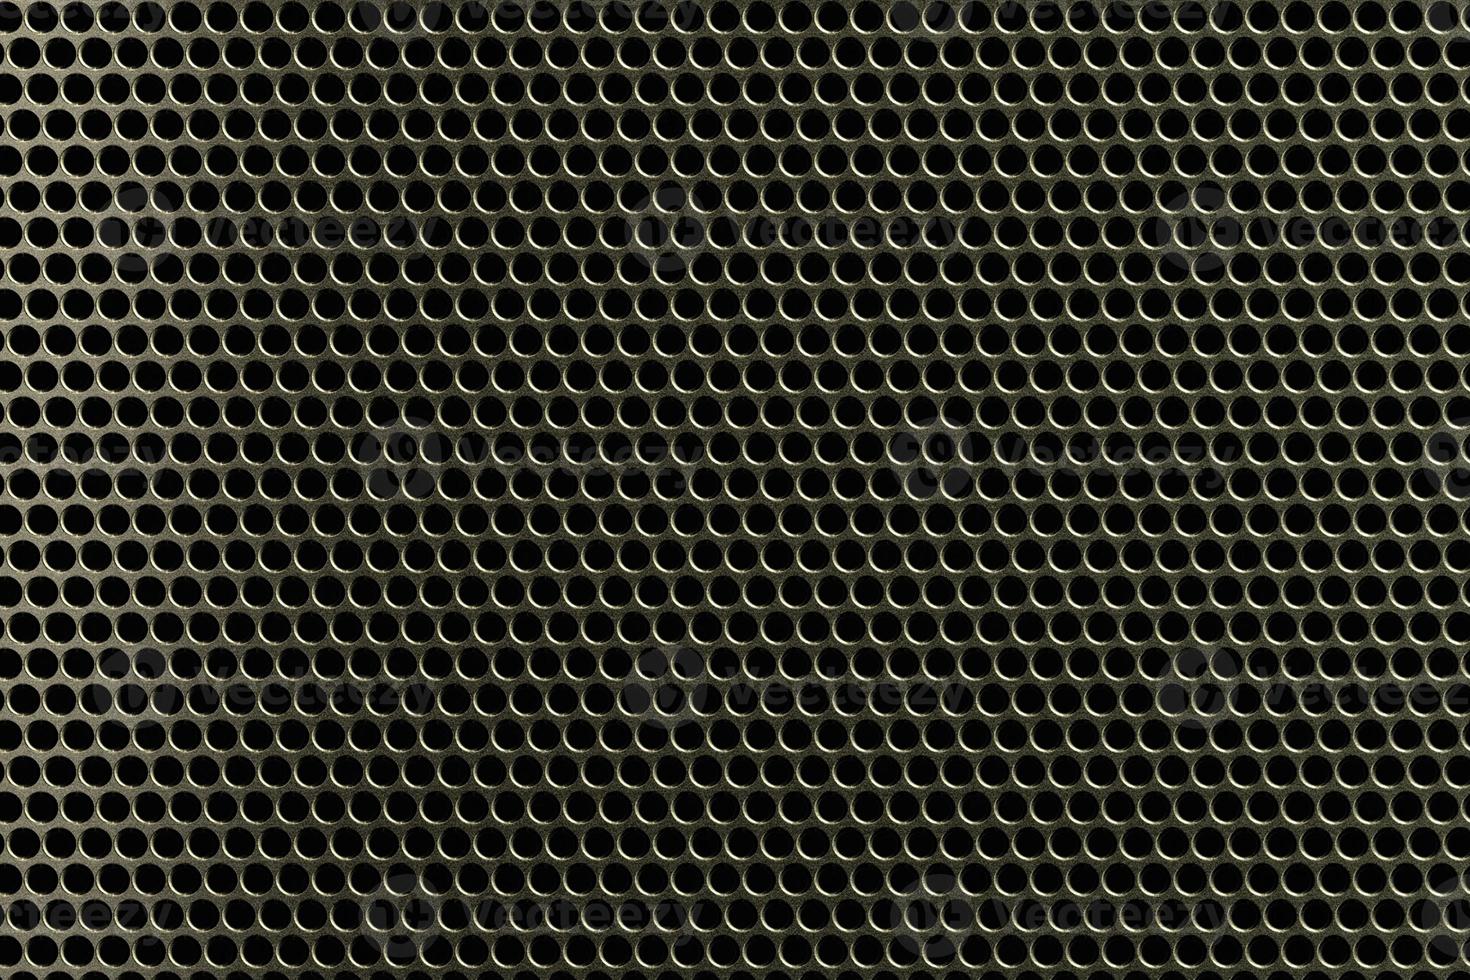 Metal grid background photo